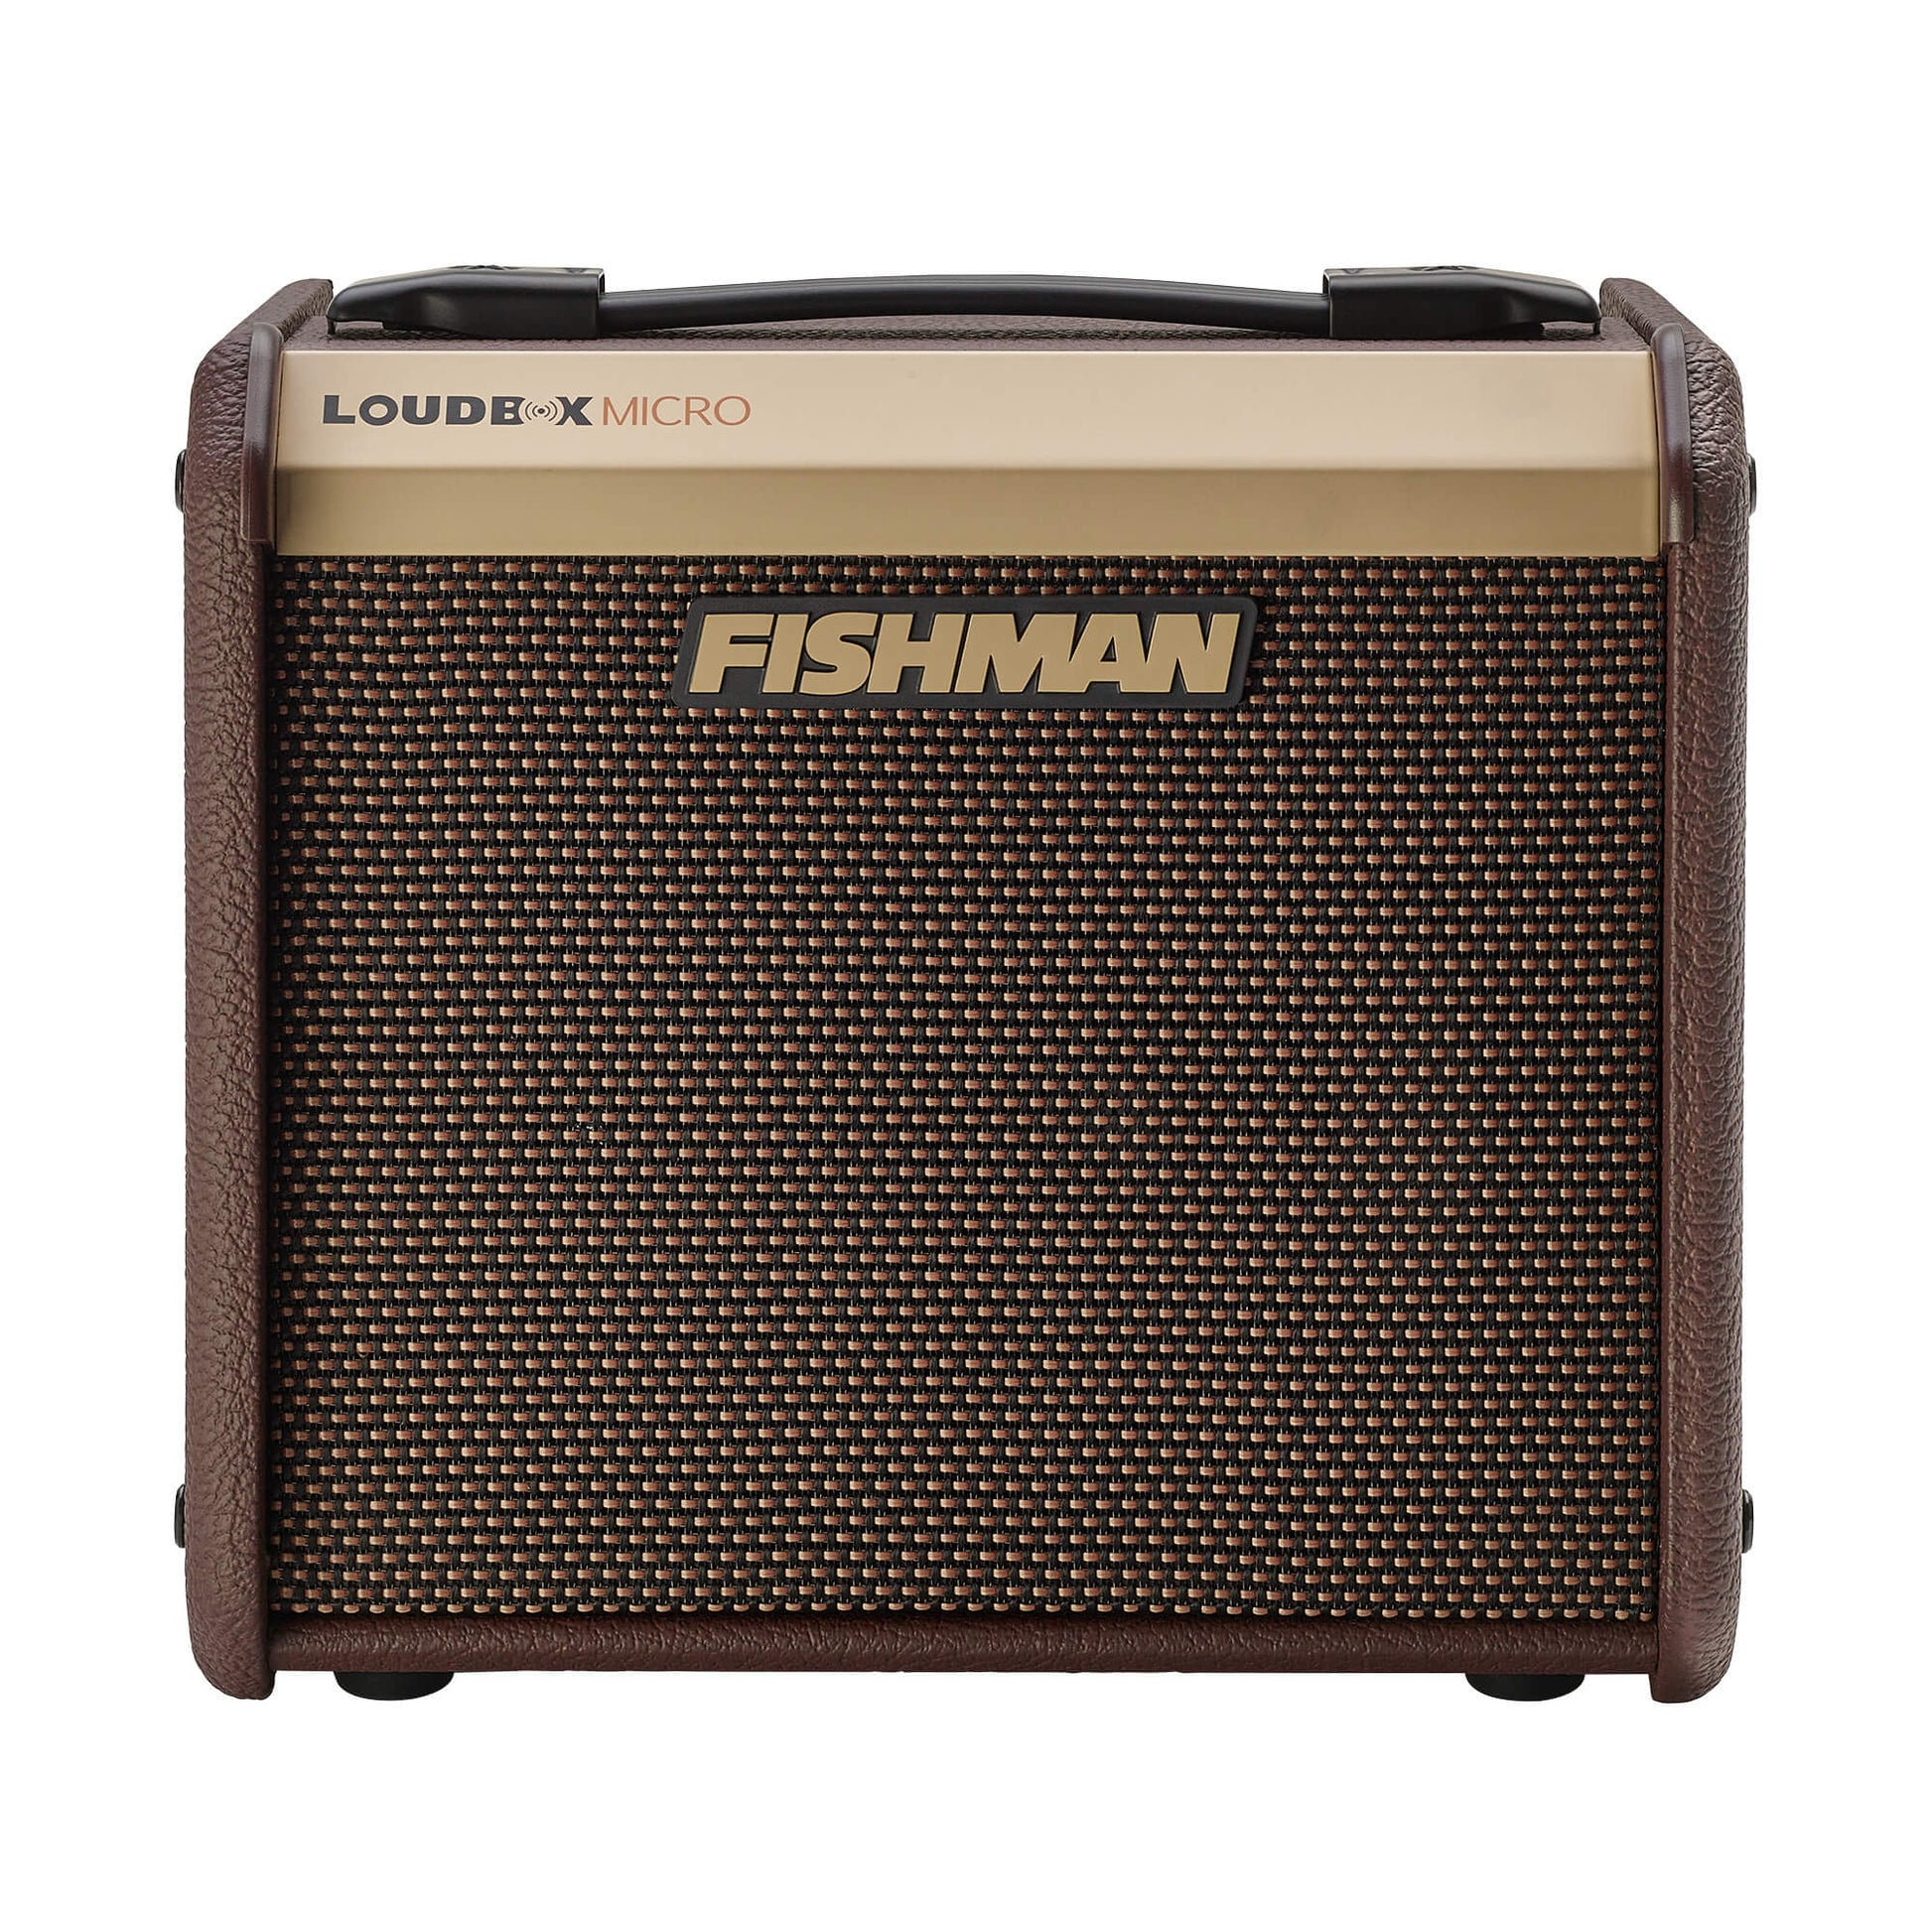 Fishman Loudbox Micro Acoustic Amp, Front